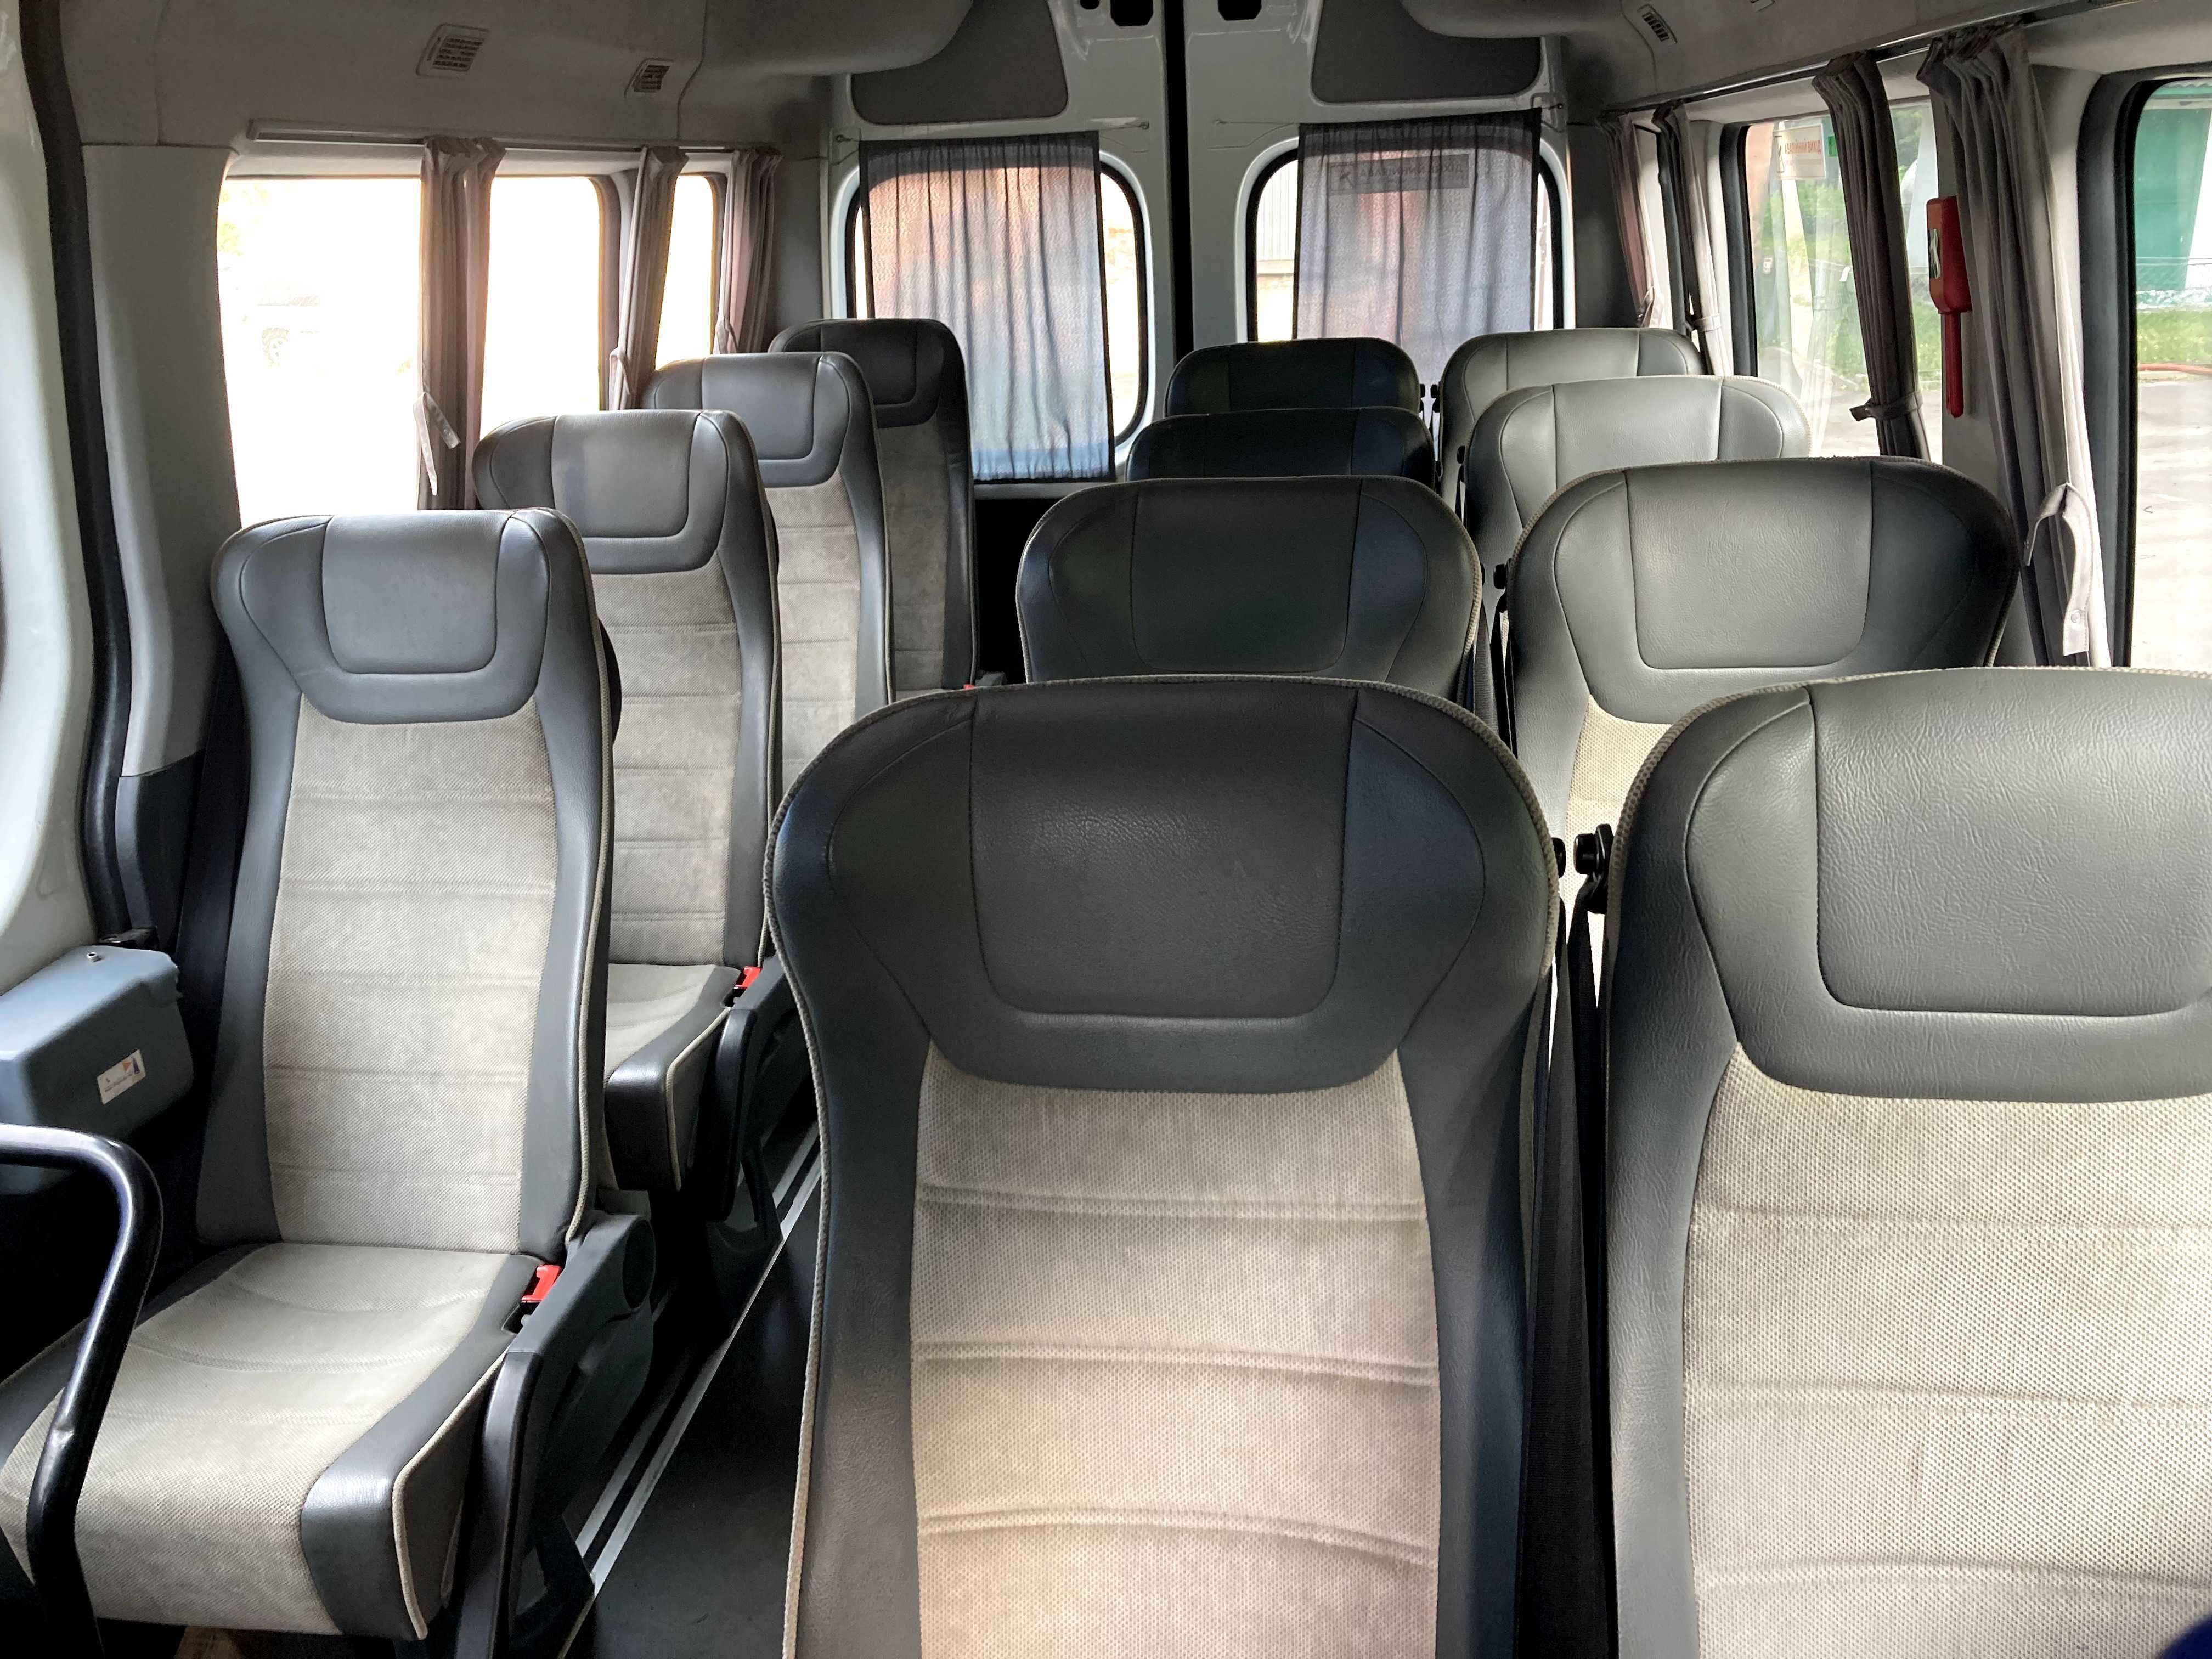 Пасажирський автобус Hyundai H350, в експлуатації з 2020 р. 17 місць.